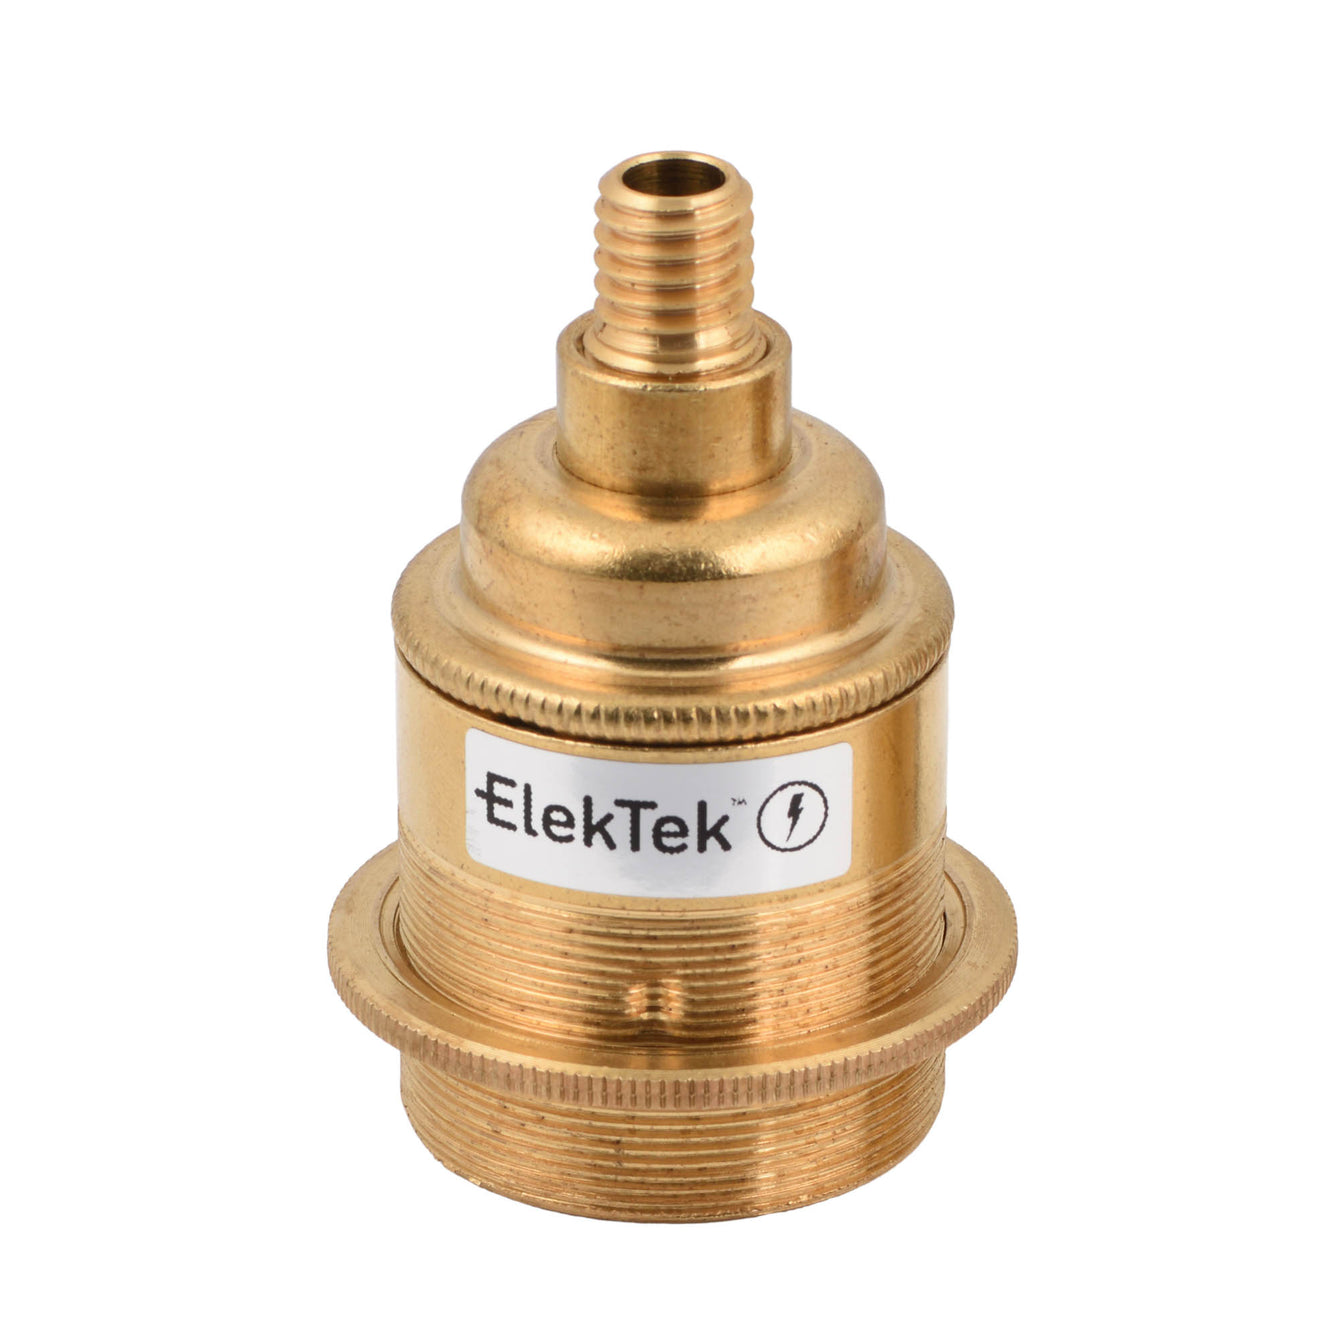 ElekTek ES Edison Screw E27 Lamp Holder Shade Ring With Wood Nipple Brass - Buy It Better Chrome